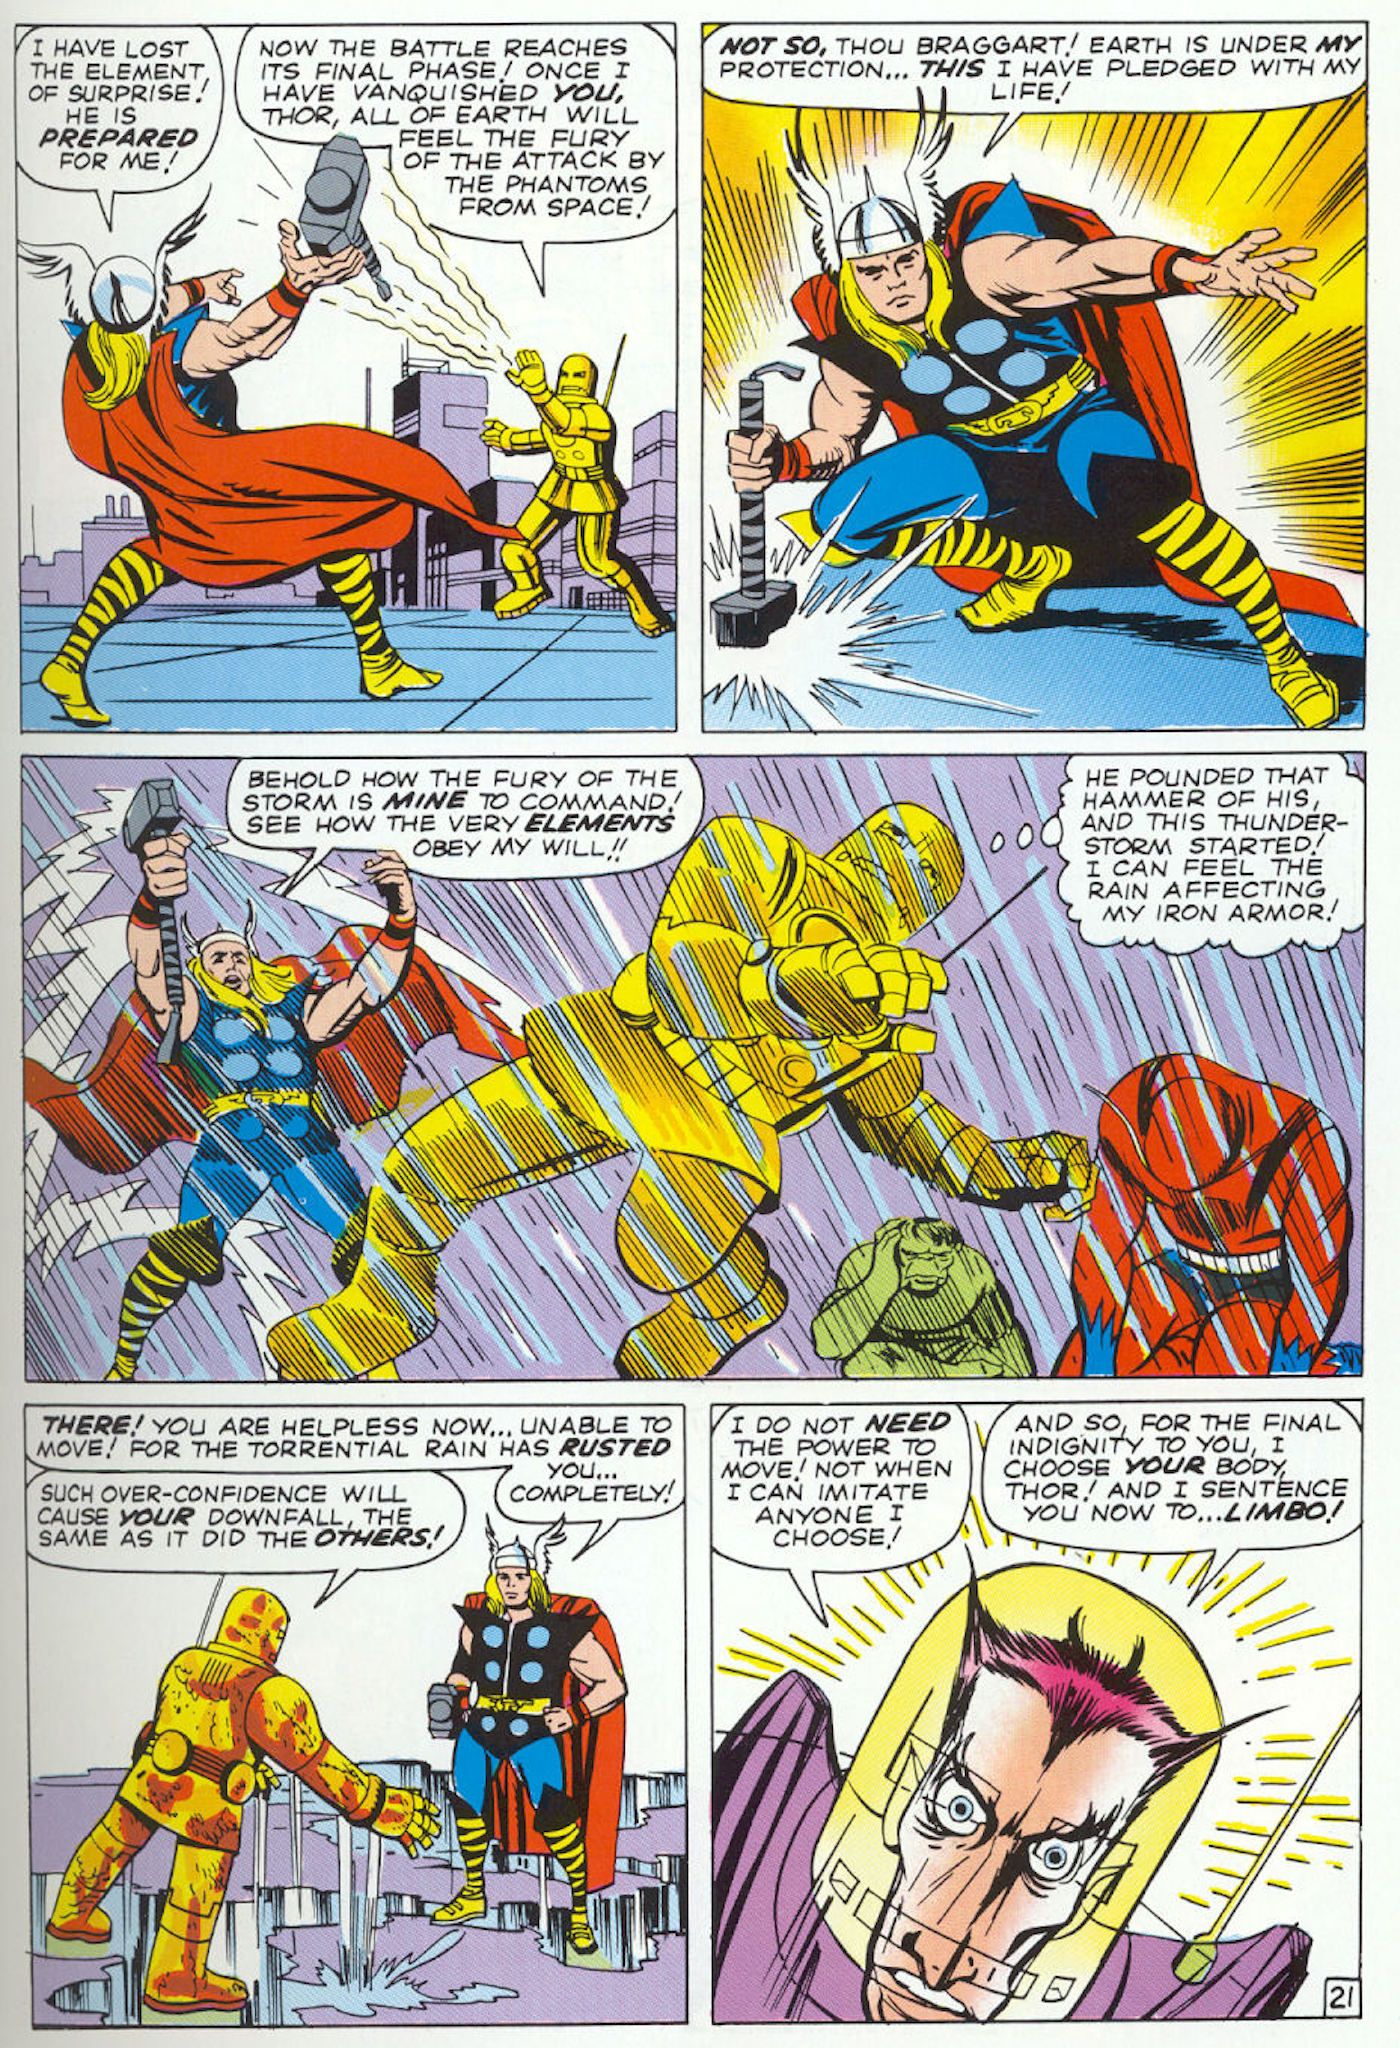 Avengers 2 Iron Man vs Thor 2